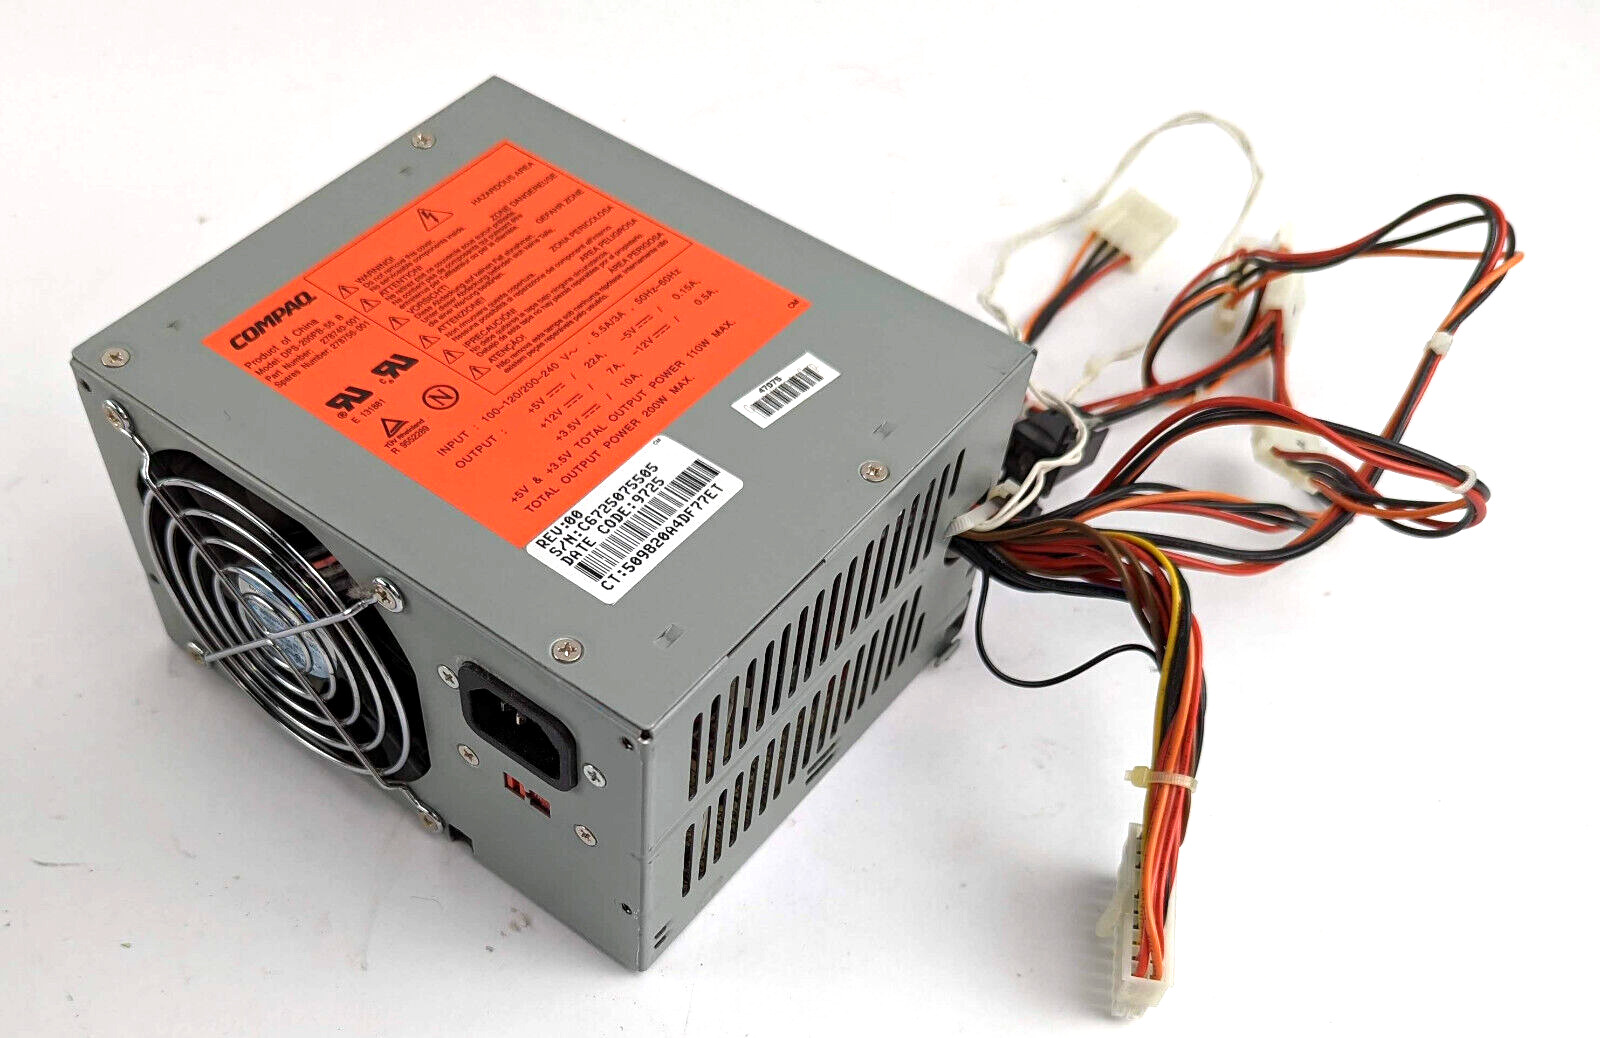 Compaq 278740-001 200W AT Power Supply Deskpro 2000 HP 210PP w/ Switch DPS-200PB